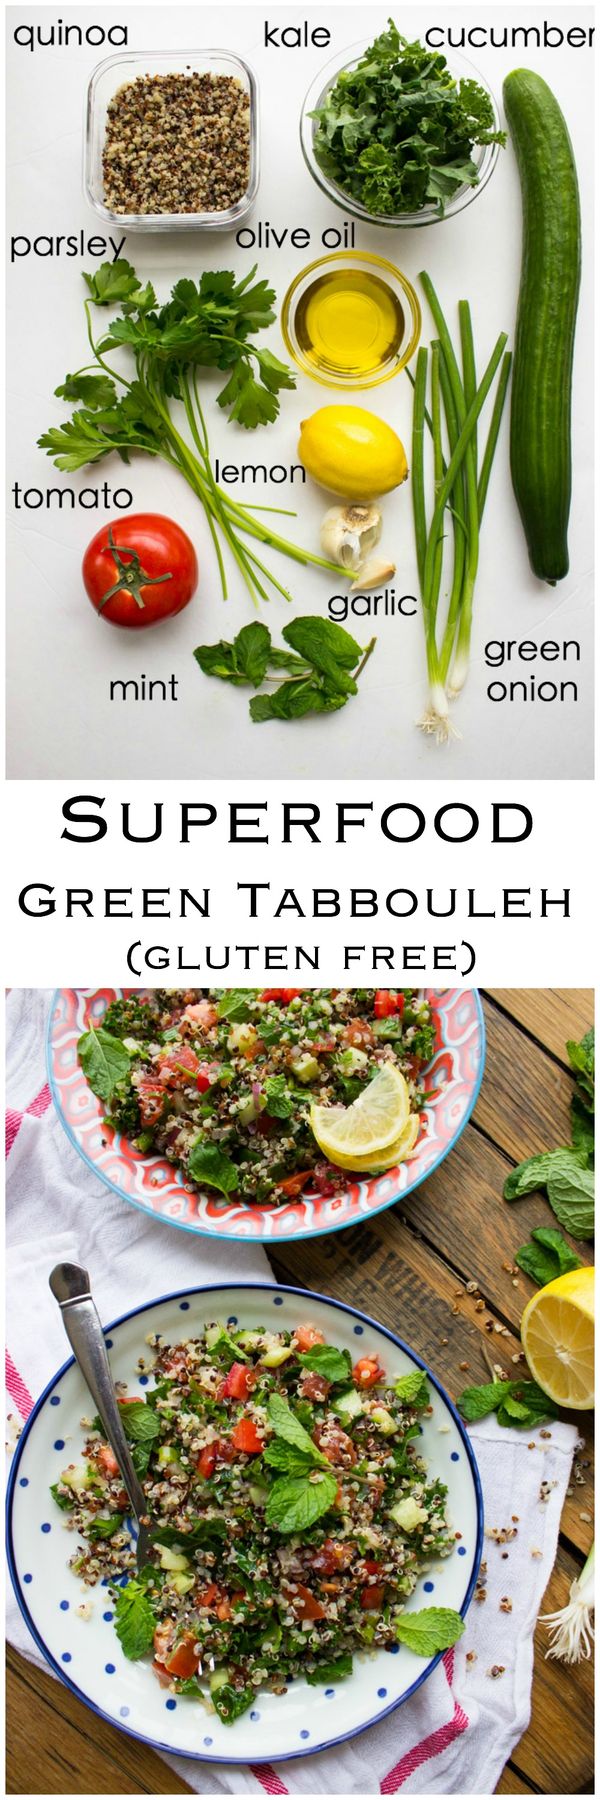 Superfood Green Tabbouleh